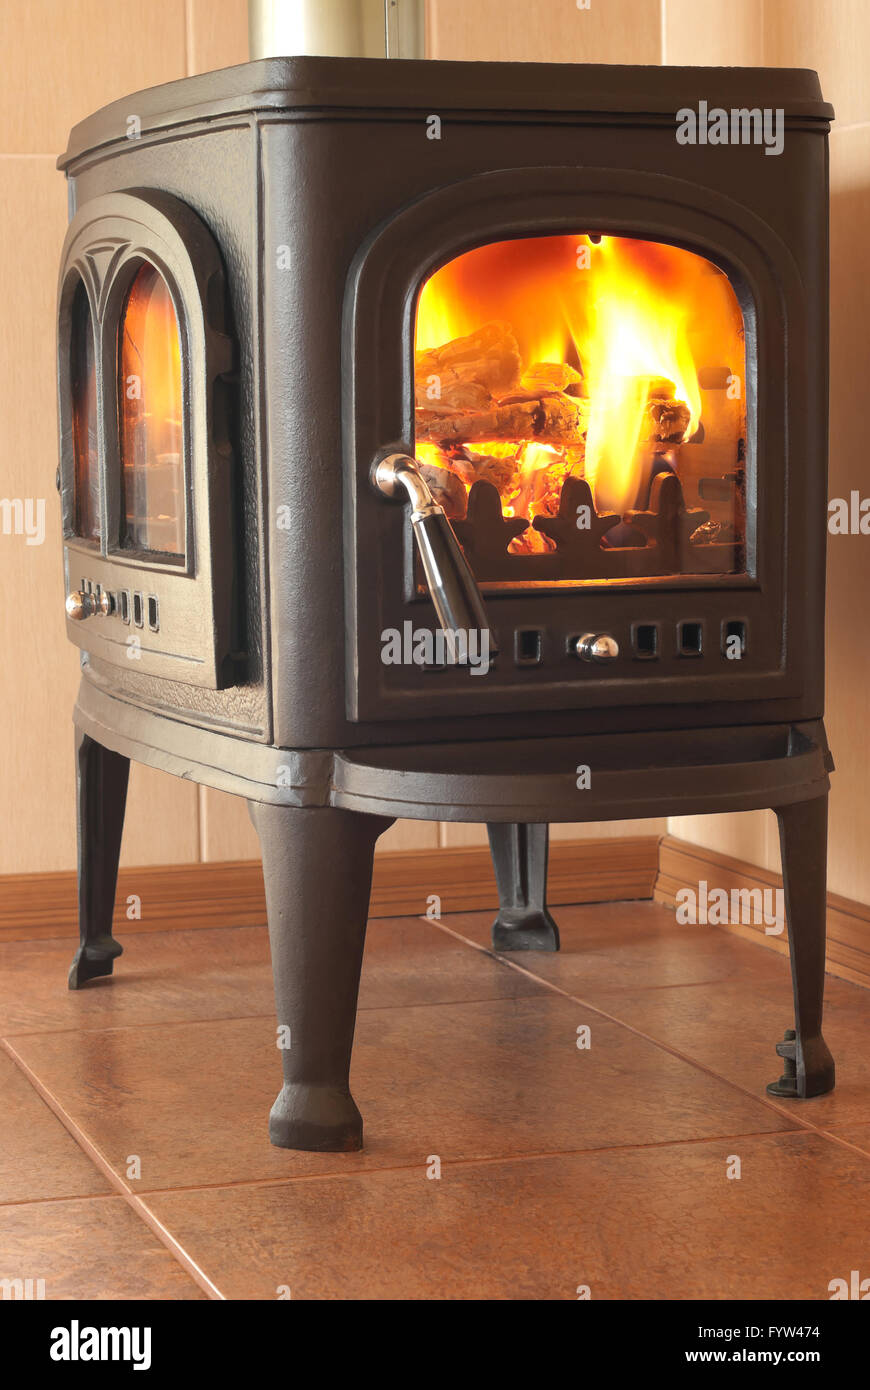 https://c8.alamy.com/comp/FYW474/classic-cast-iron-stove-in-the-interior-FYW474.jpg